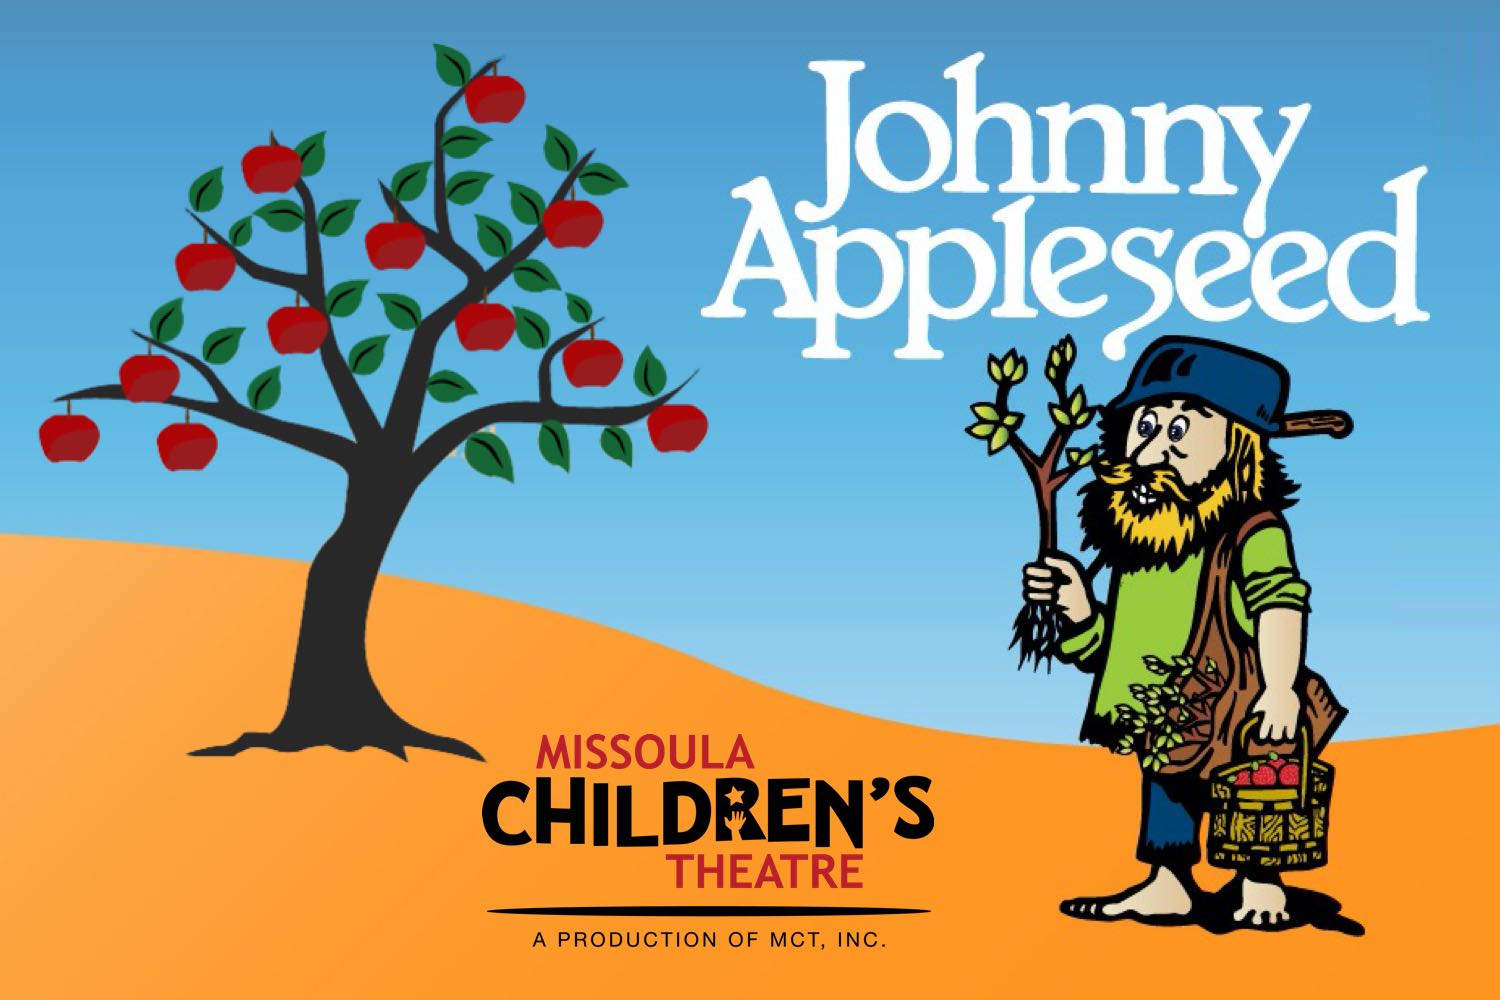 Johnny Appleseed Missoula Children's Theatre